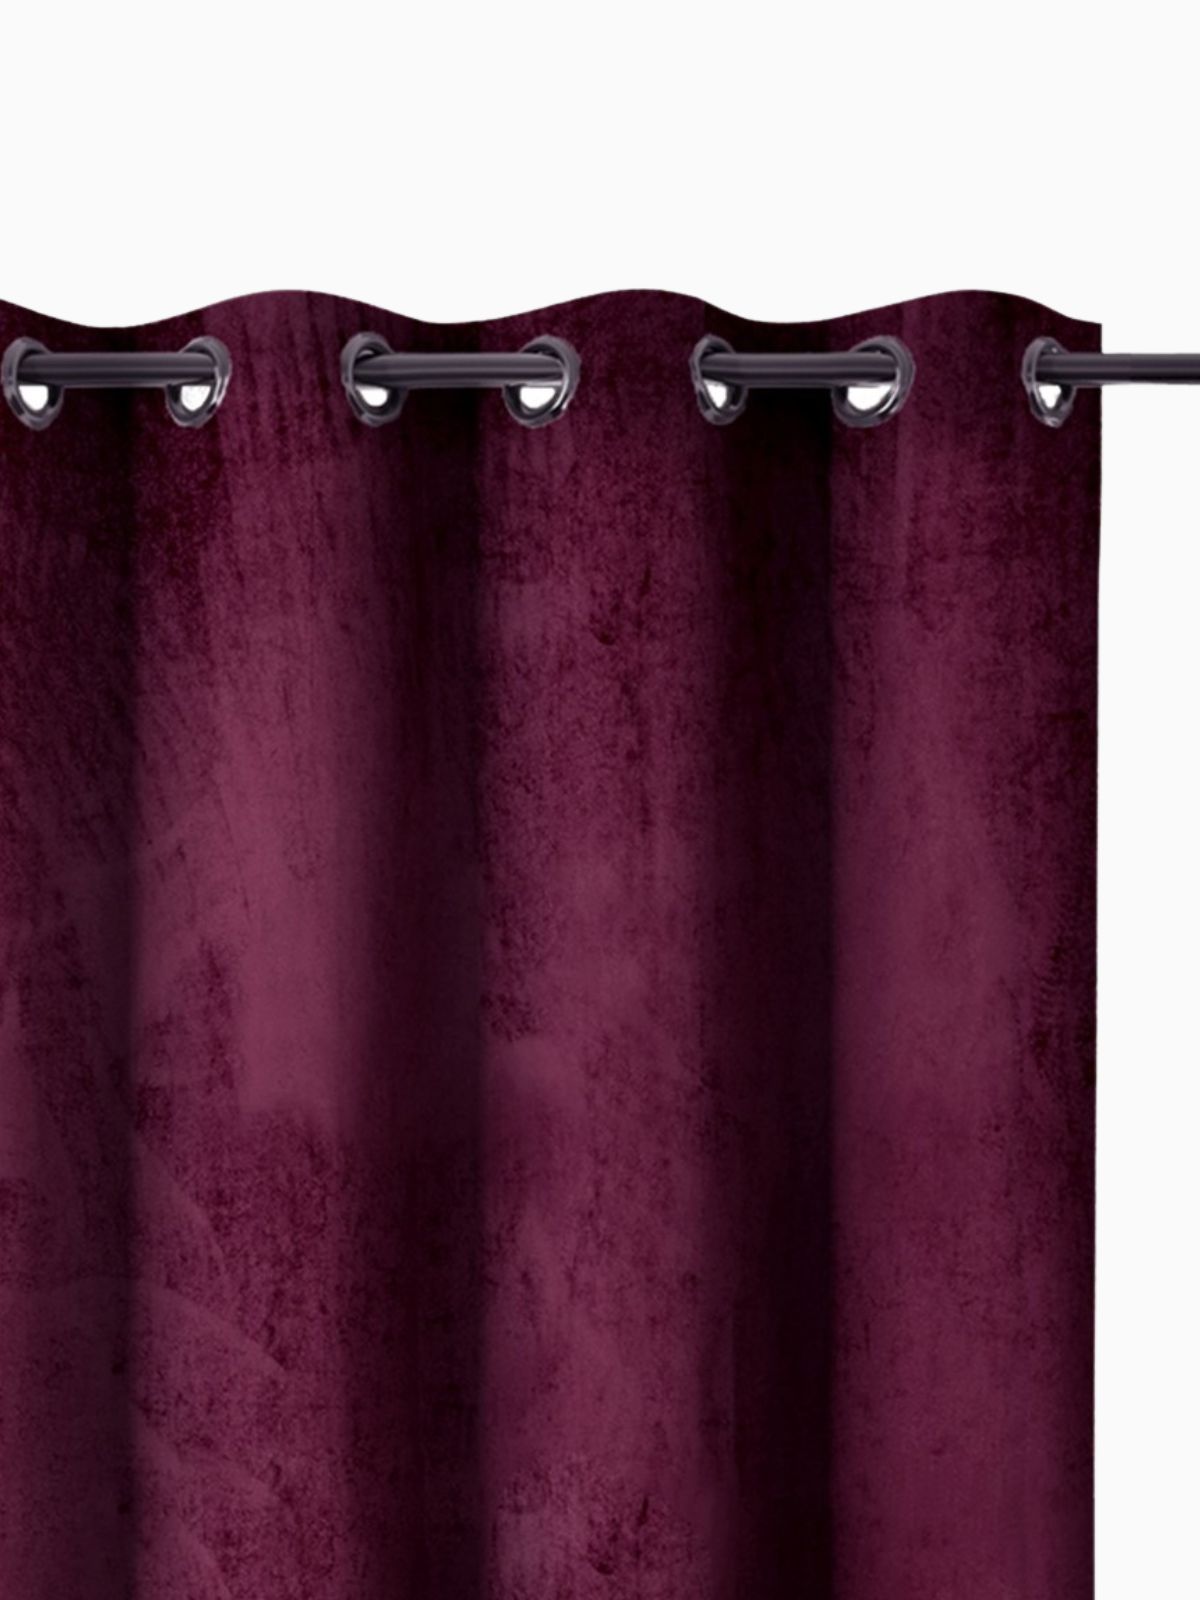 Tenda Velvet in colore bordeaux, effetto velluto 140x245 cm.-1